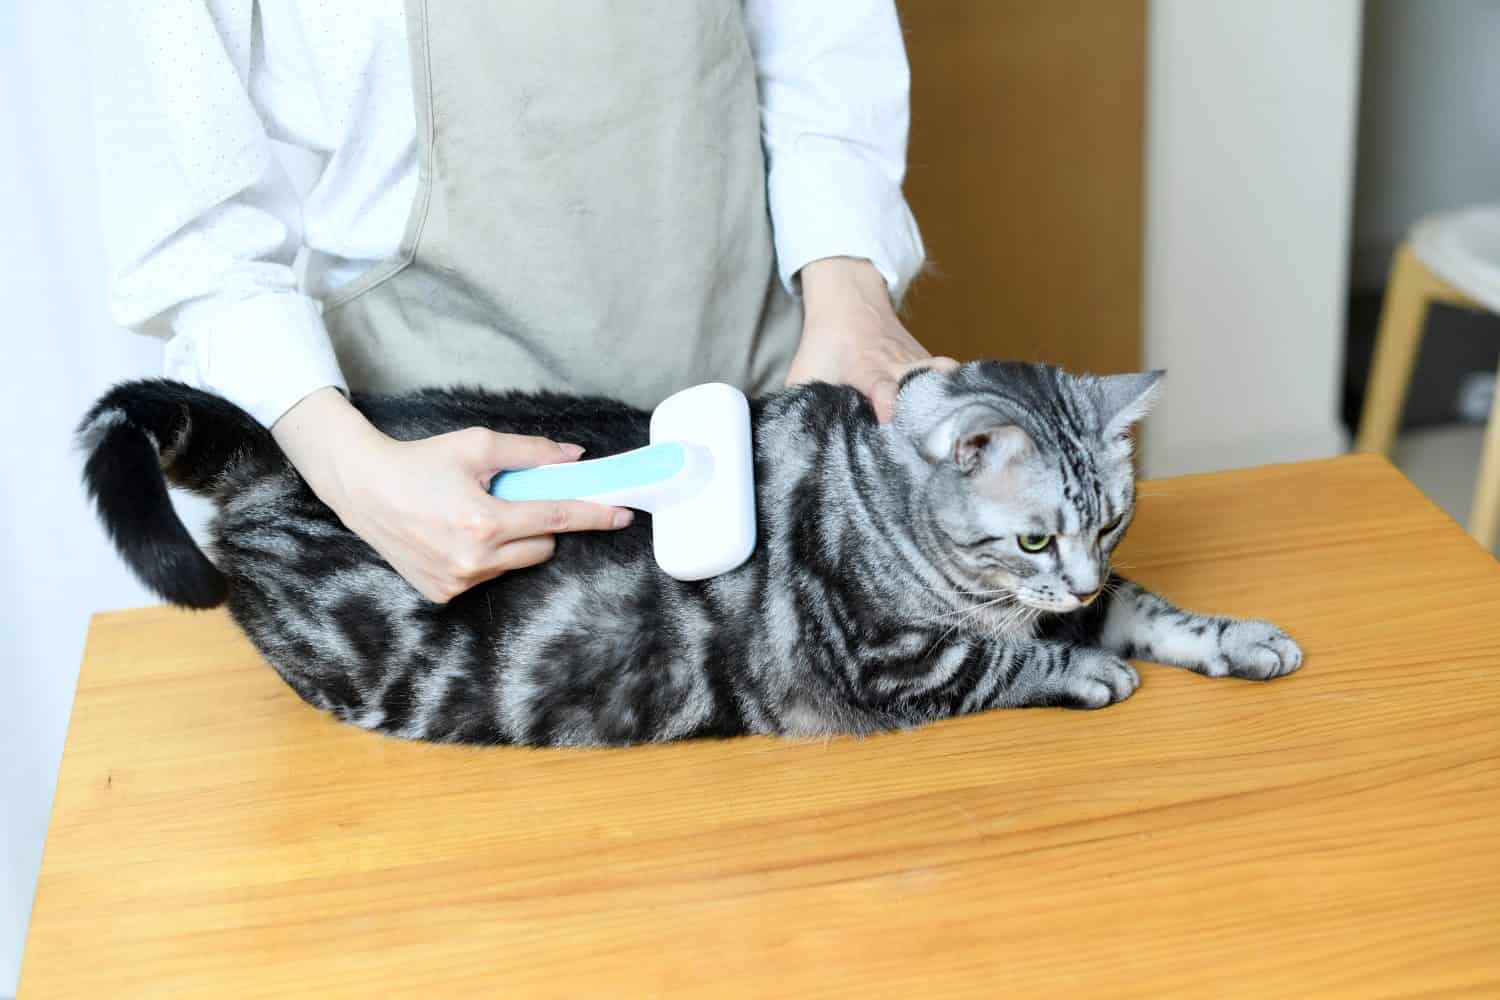 A trimmer woman trimming a cat's coat